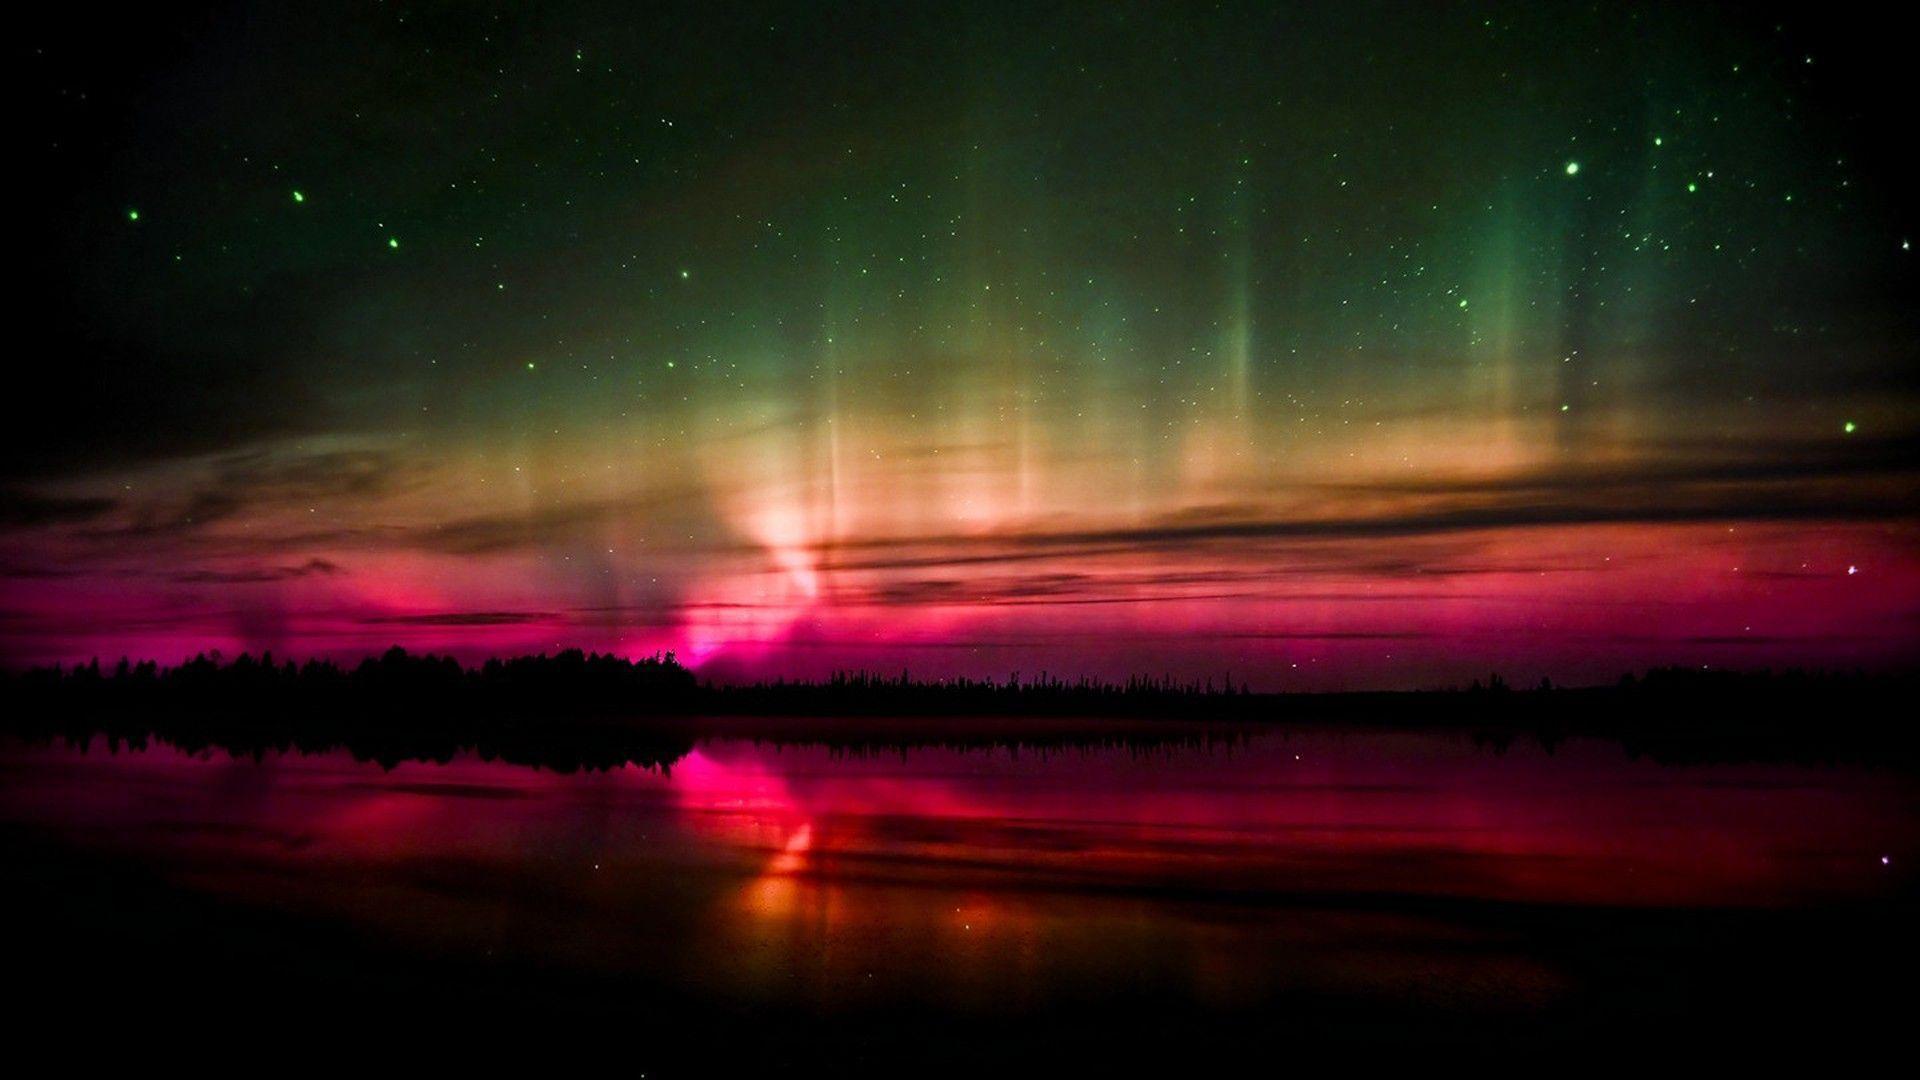 Download wallpaper 2880x1800 arctic mountains nature aurora borealis mac  pro retaia 2880x1800 hd background 19519